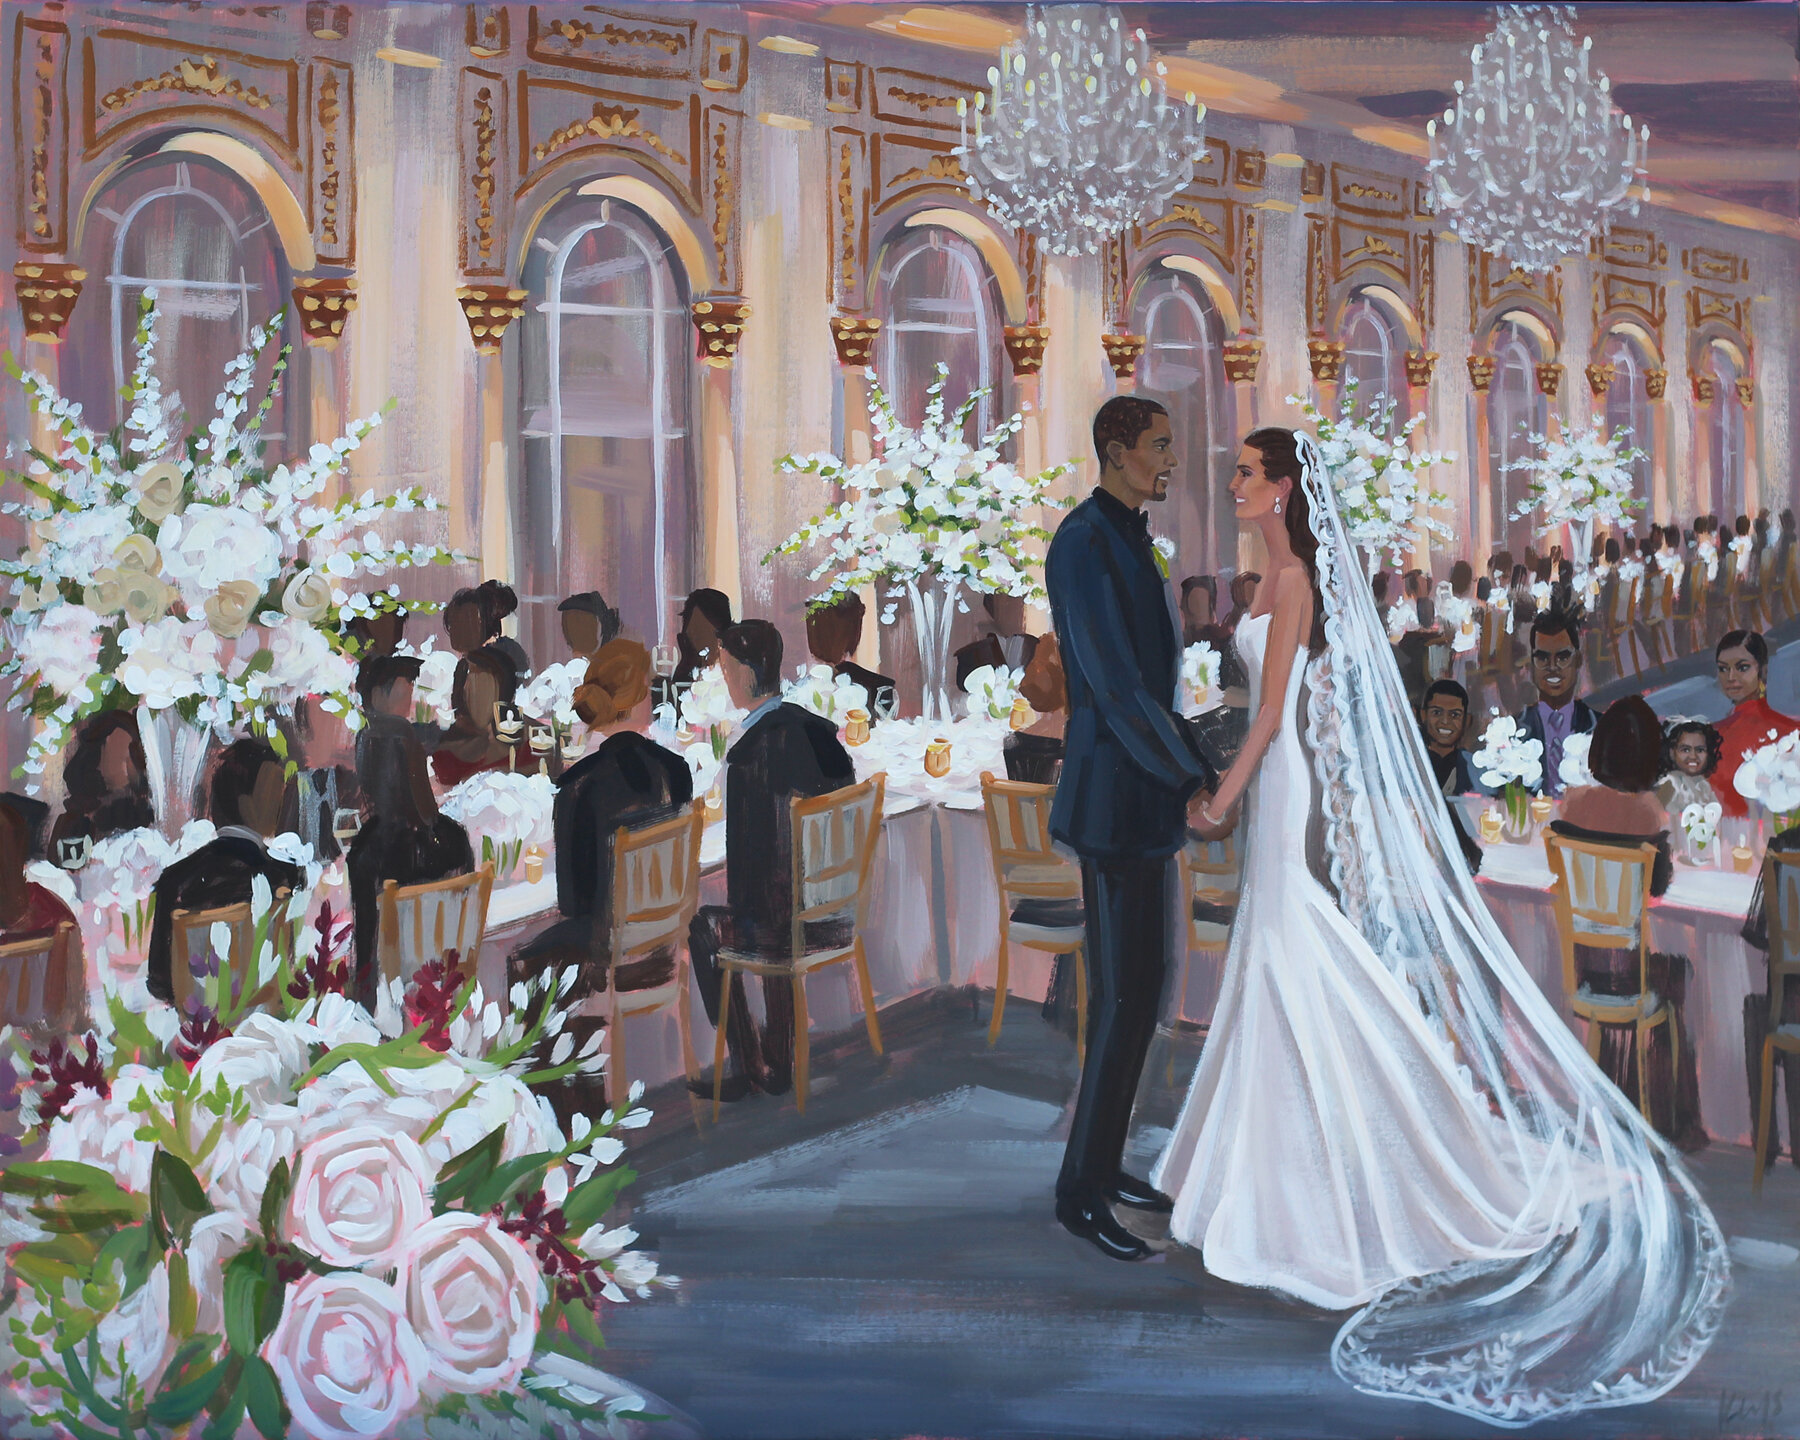 Live Wedding Painter, Ben Keys, captured former NFL player Jack Brewer’s sweet reception moment with his bride Cortney.